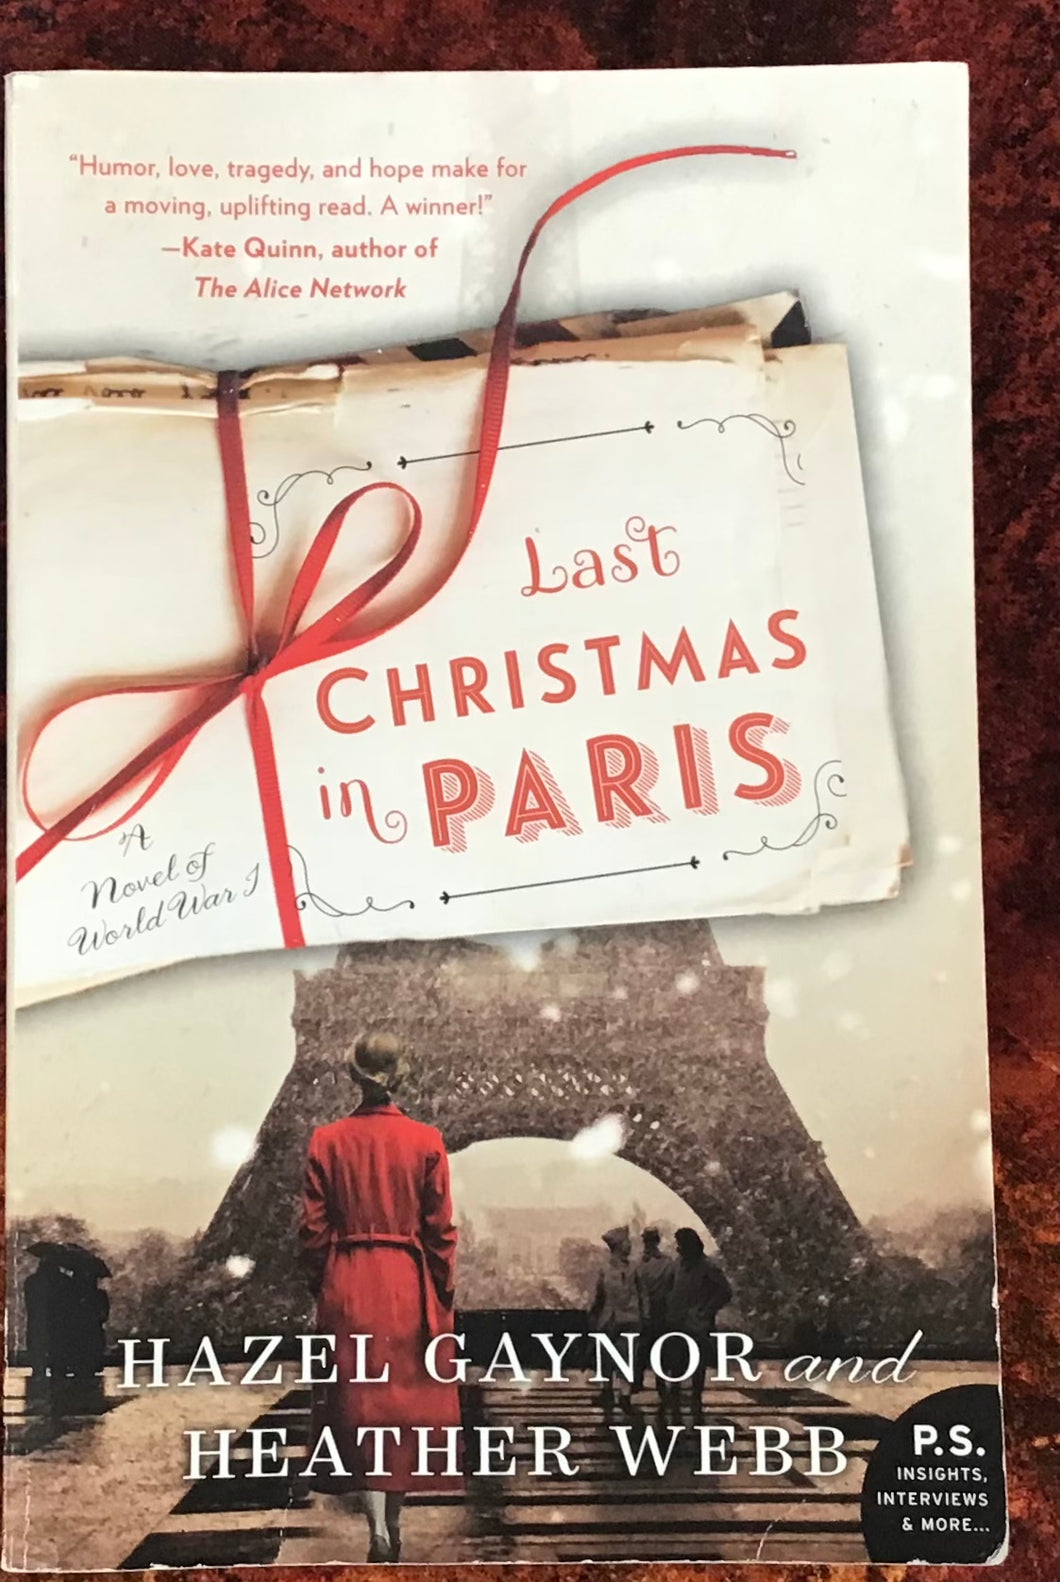 Last Christmas in Paris, by Hazel Gaynor and Heather Webb